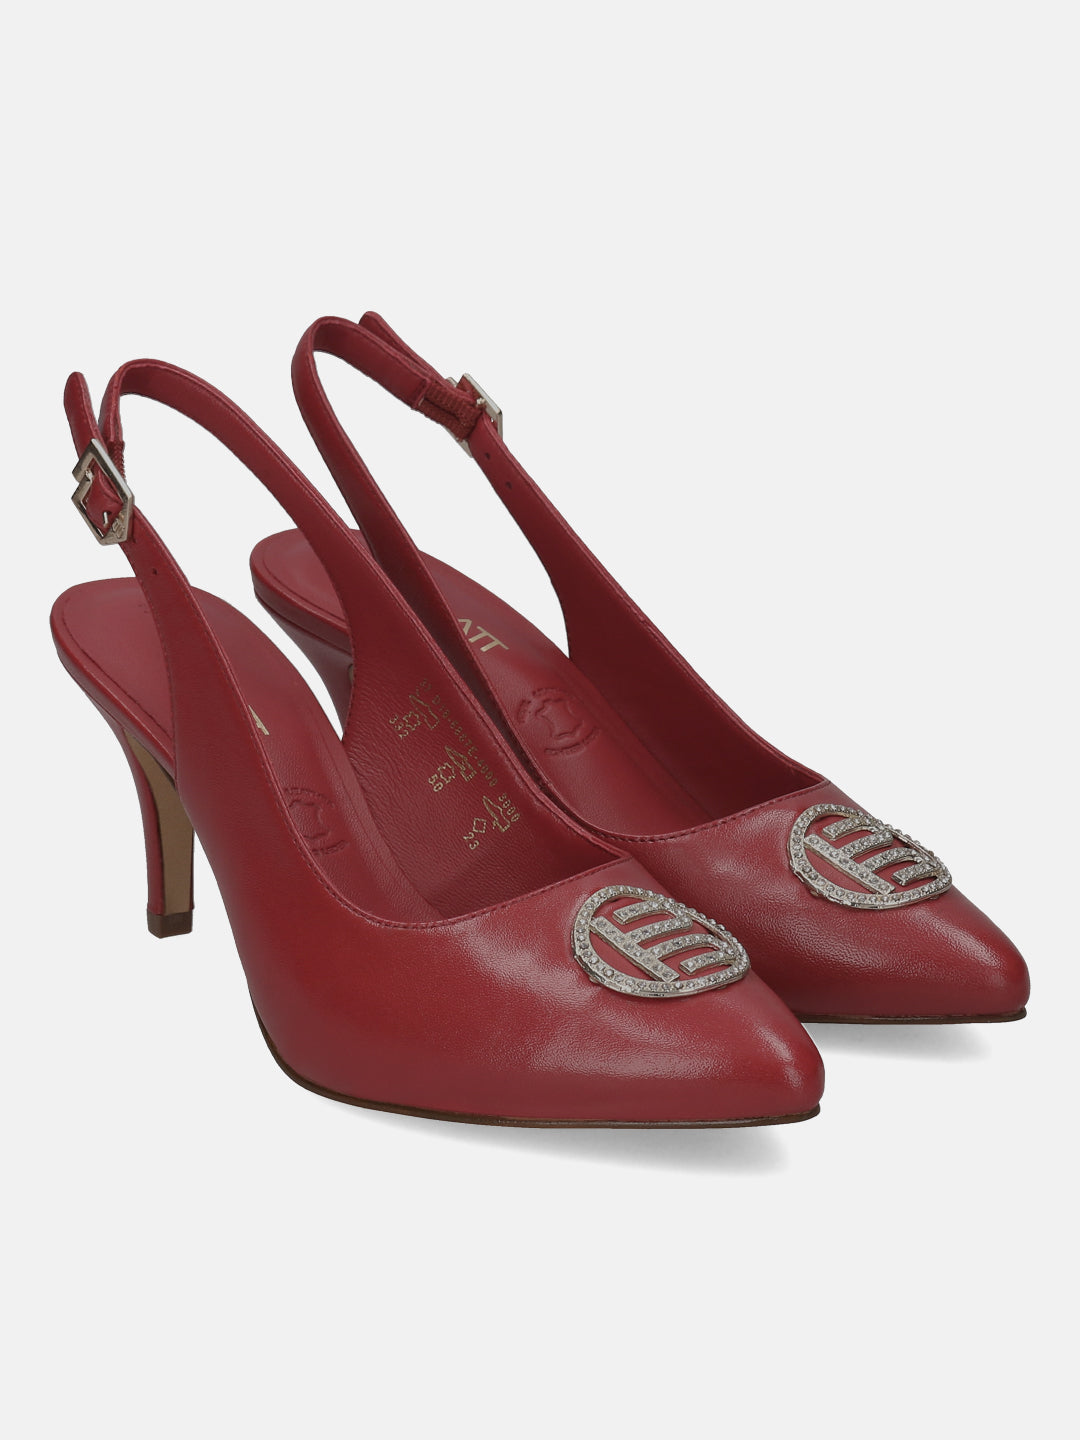 BAGATT Premium Leather Red Back Strap Heels